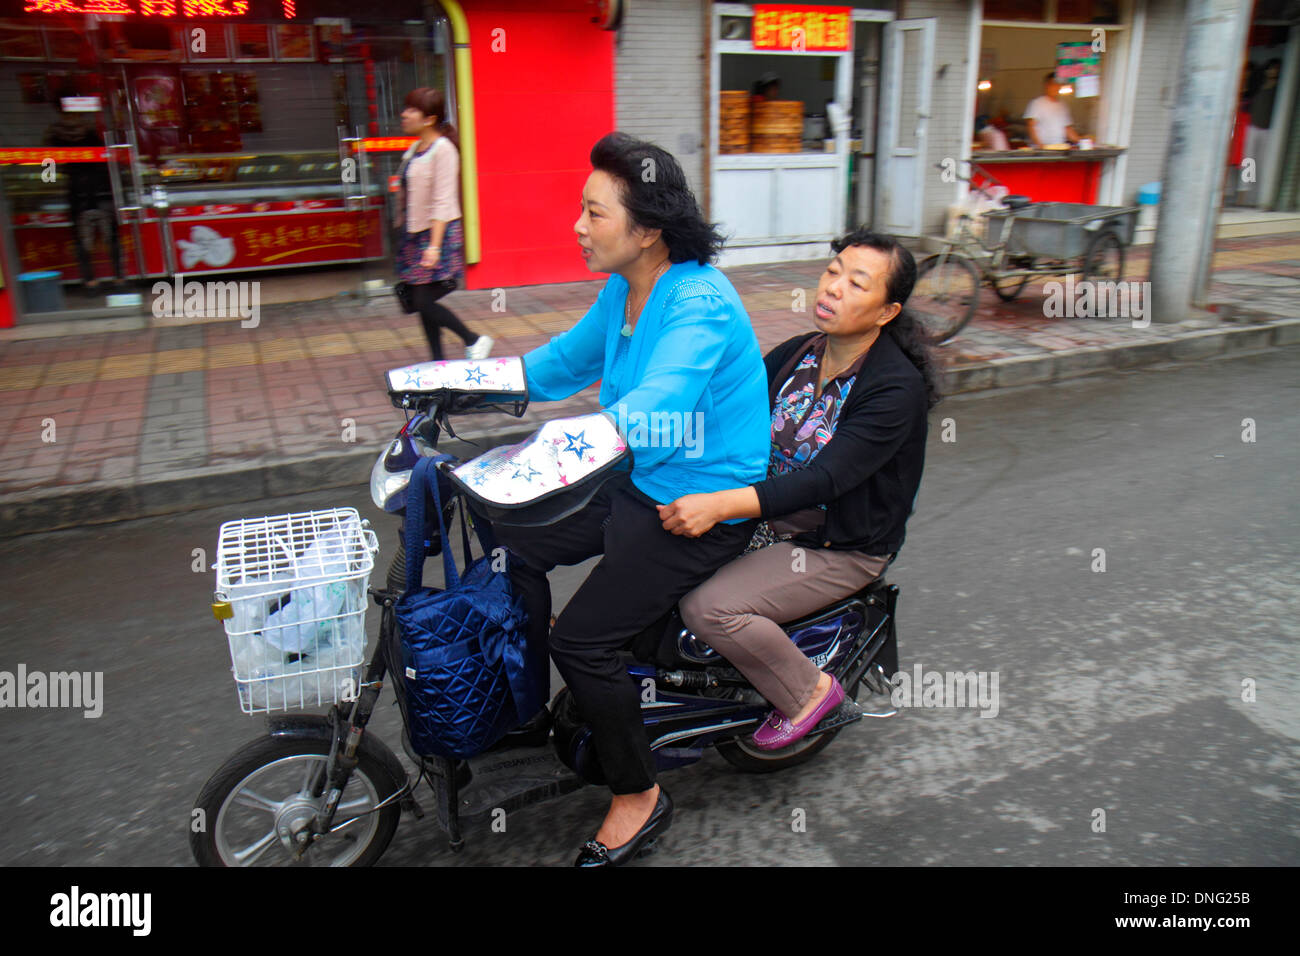 Pechino Cina,Asia,cinese,orientale,Xicheng,strada,asiatici asiatici,adulti,donna donna donna donna donna donna donna donna donna donna donna donna donna, amici,scooter elettrico scooter, equitazione, visitatori Foto Stock